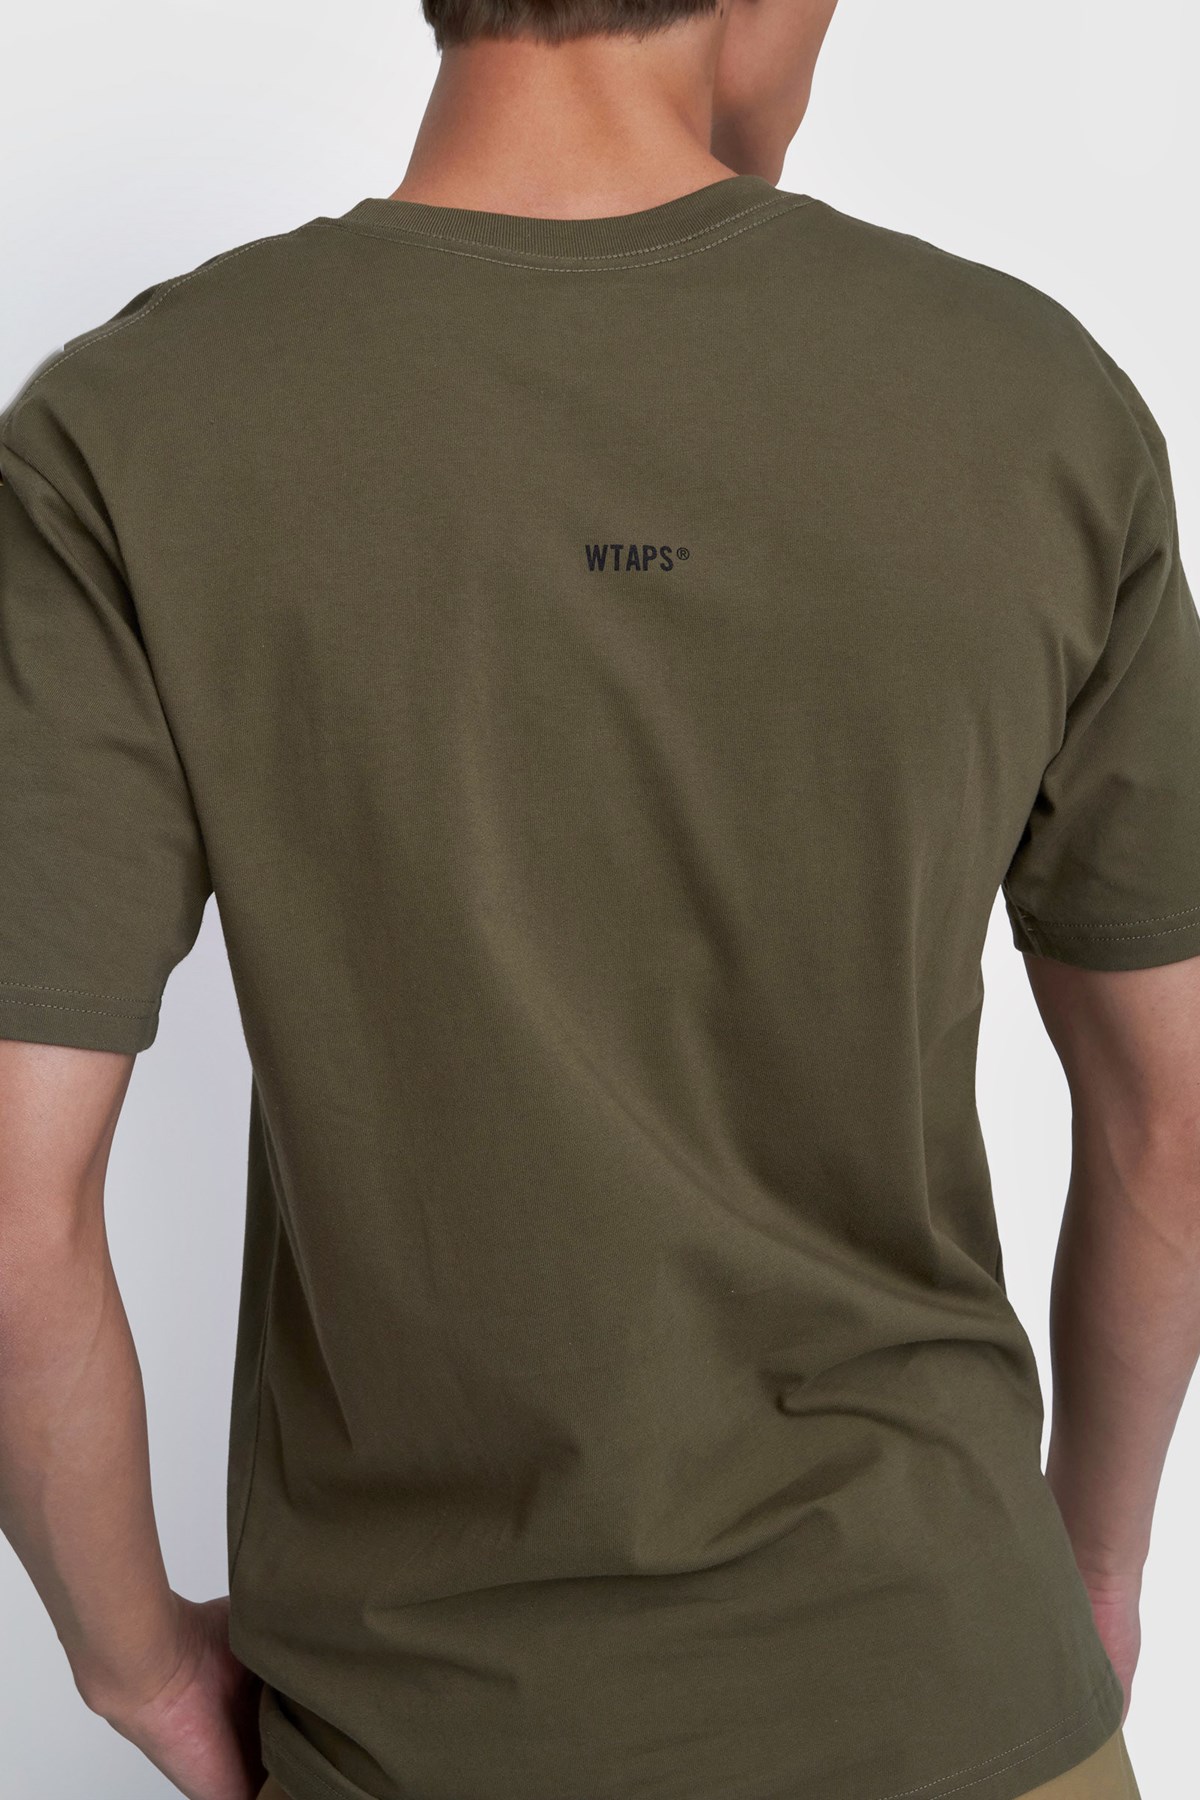 WTAPS T-shirt / Knit Olive drab | WoodWood.com